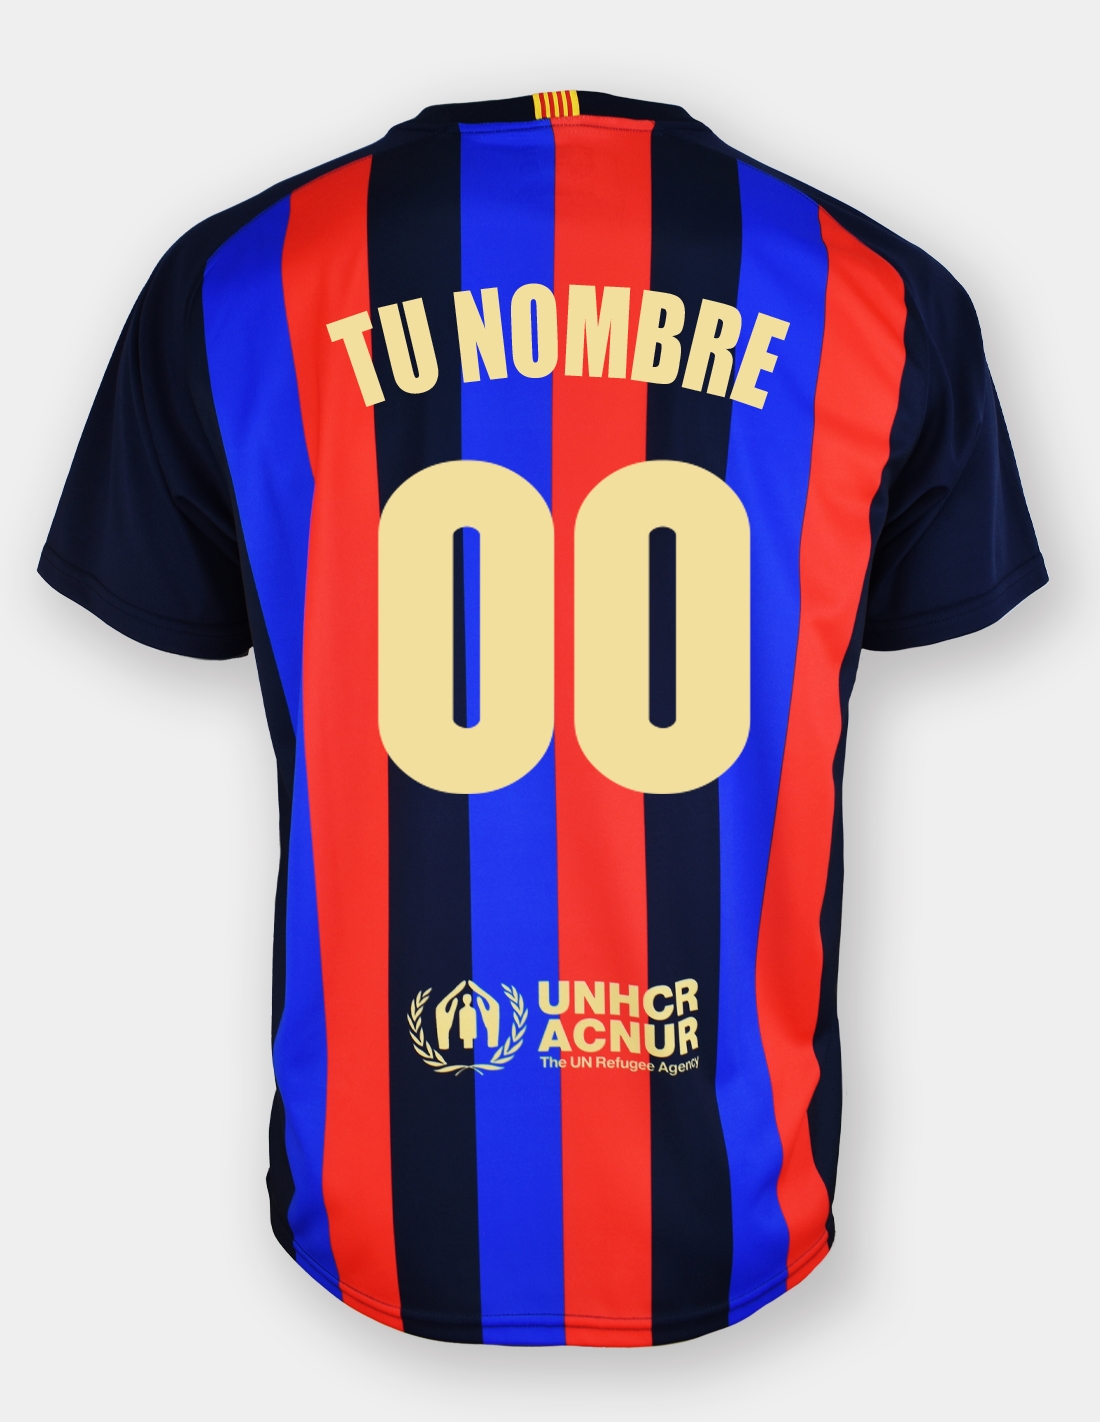 Personaliza tu camiseta. Oficial FC Barcelona - Camiseta equipación 22/23 - Adulto Talla S Color Blaugrana Dorsal Barcelona Nombre